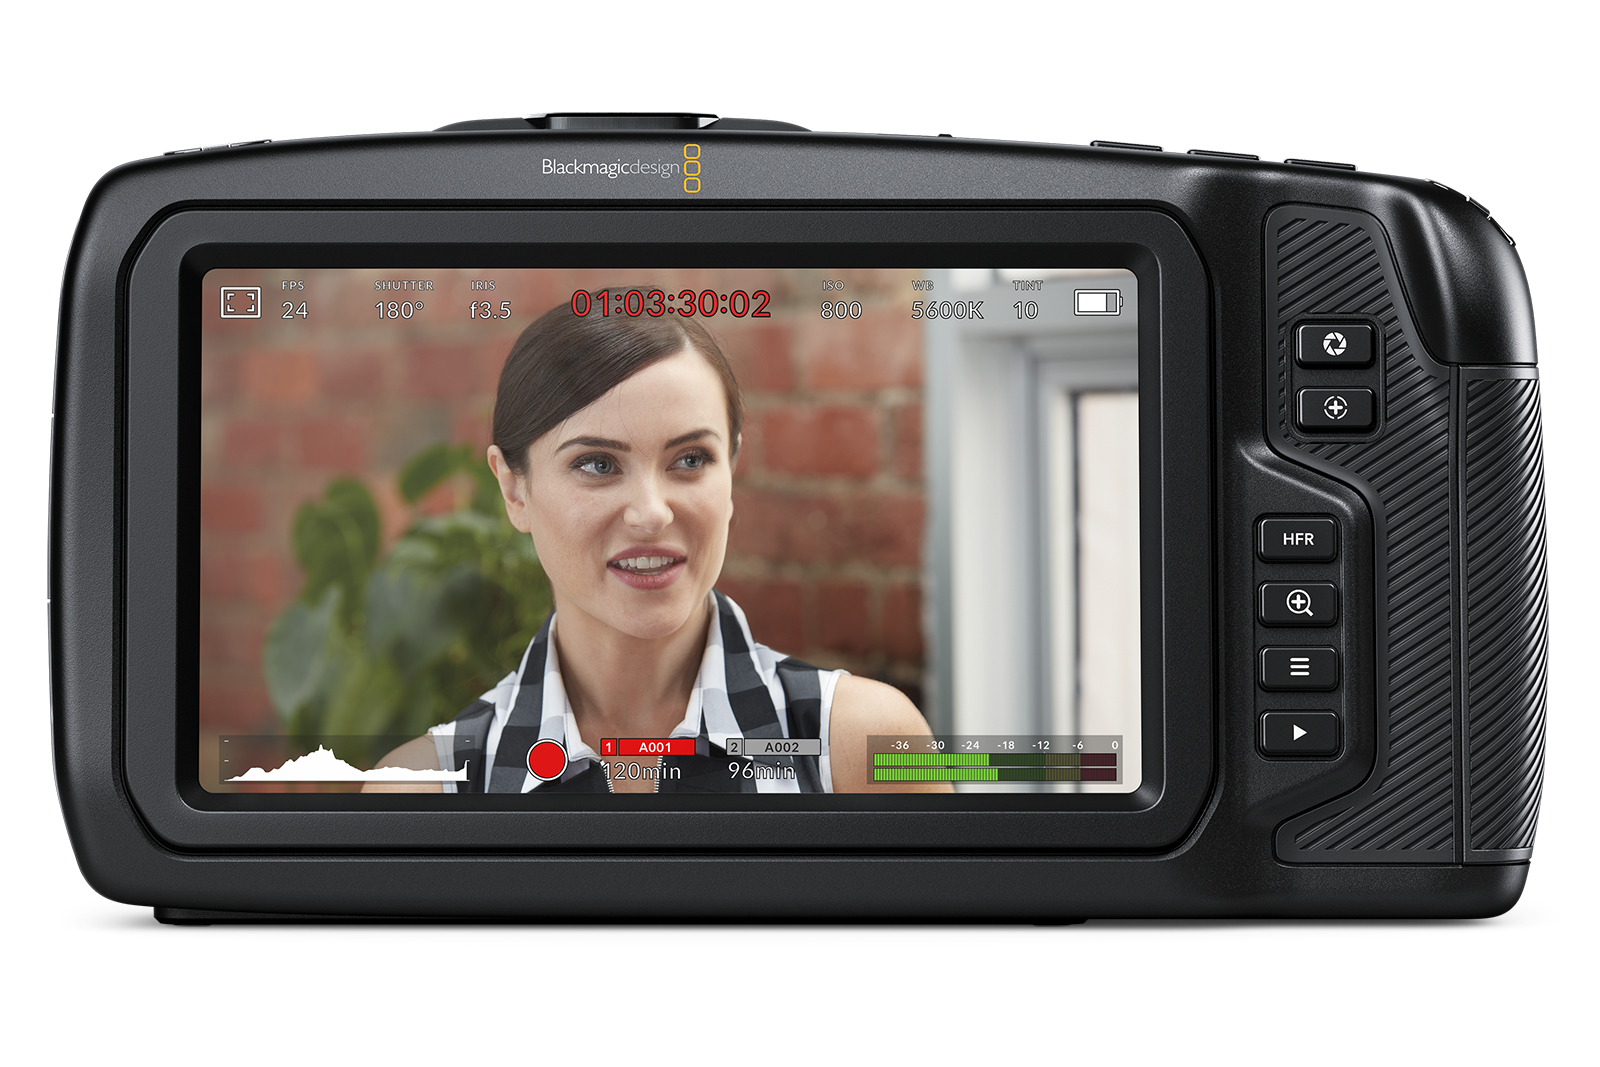 blackmagic pocket cinema camera 4k davinci resolve 15 announced back